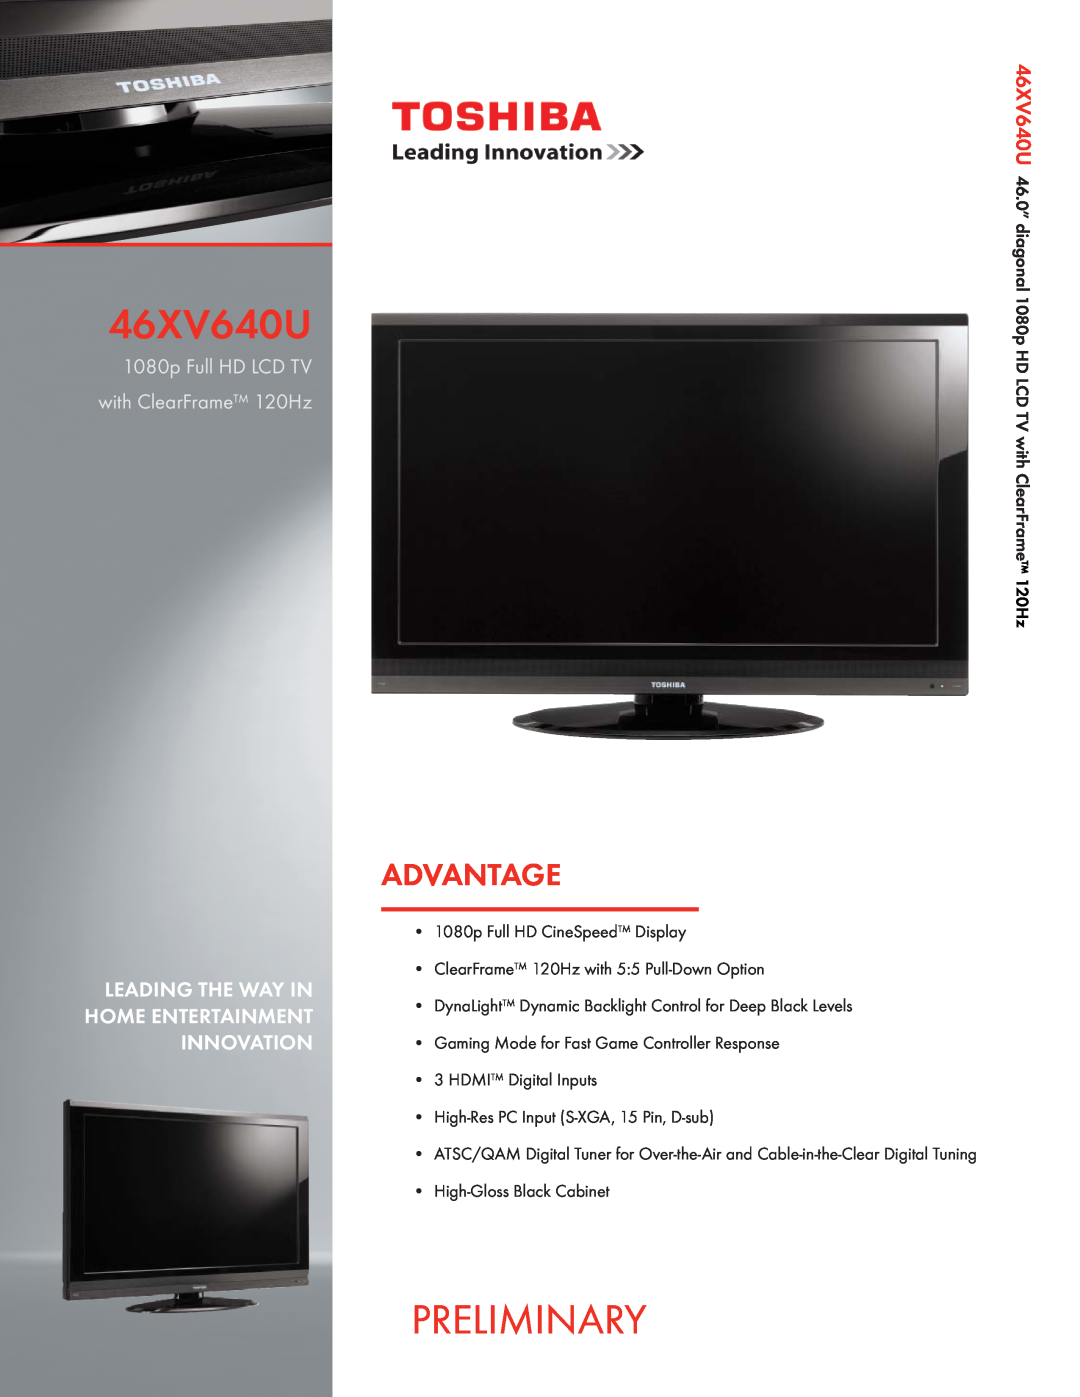 Toshiba 46XV640U manual Preliminary, Advantage, 1080p Full HD LCD TV with ClearFrame 120Hz 